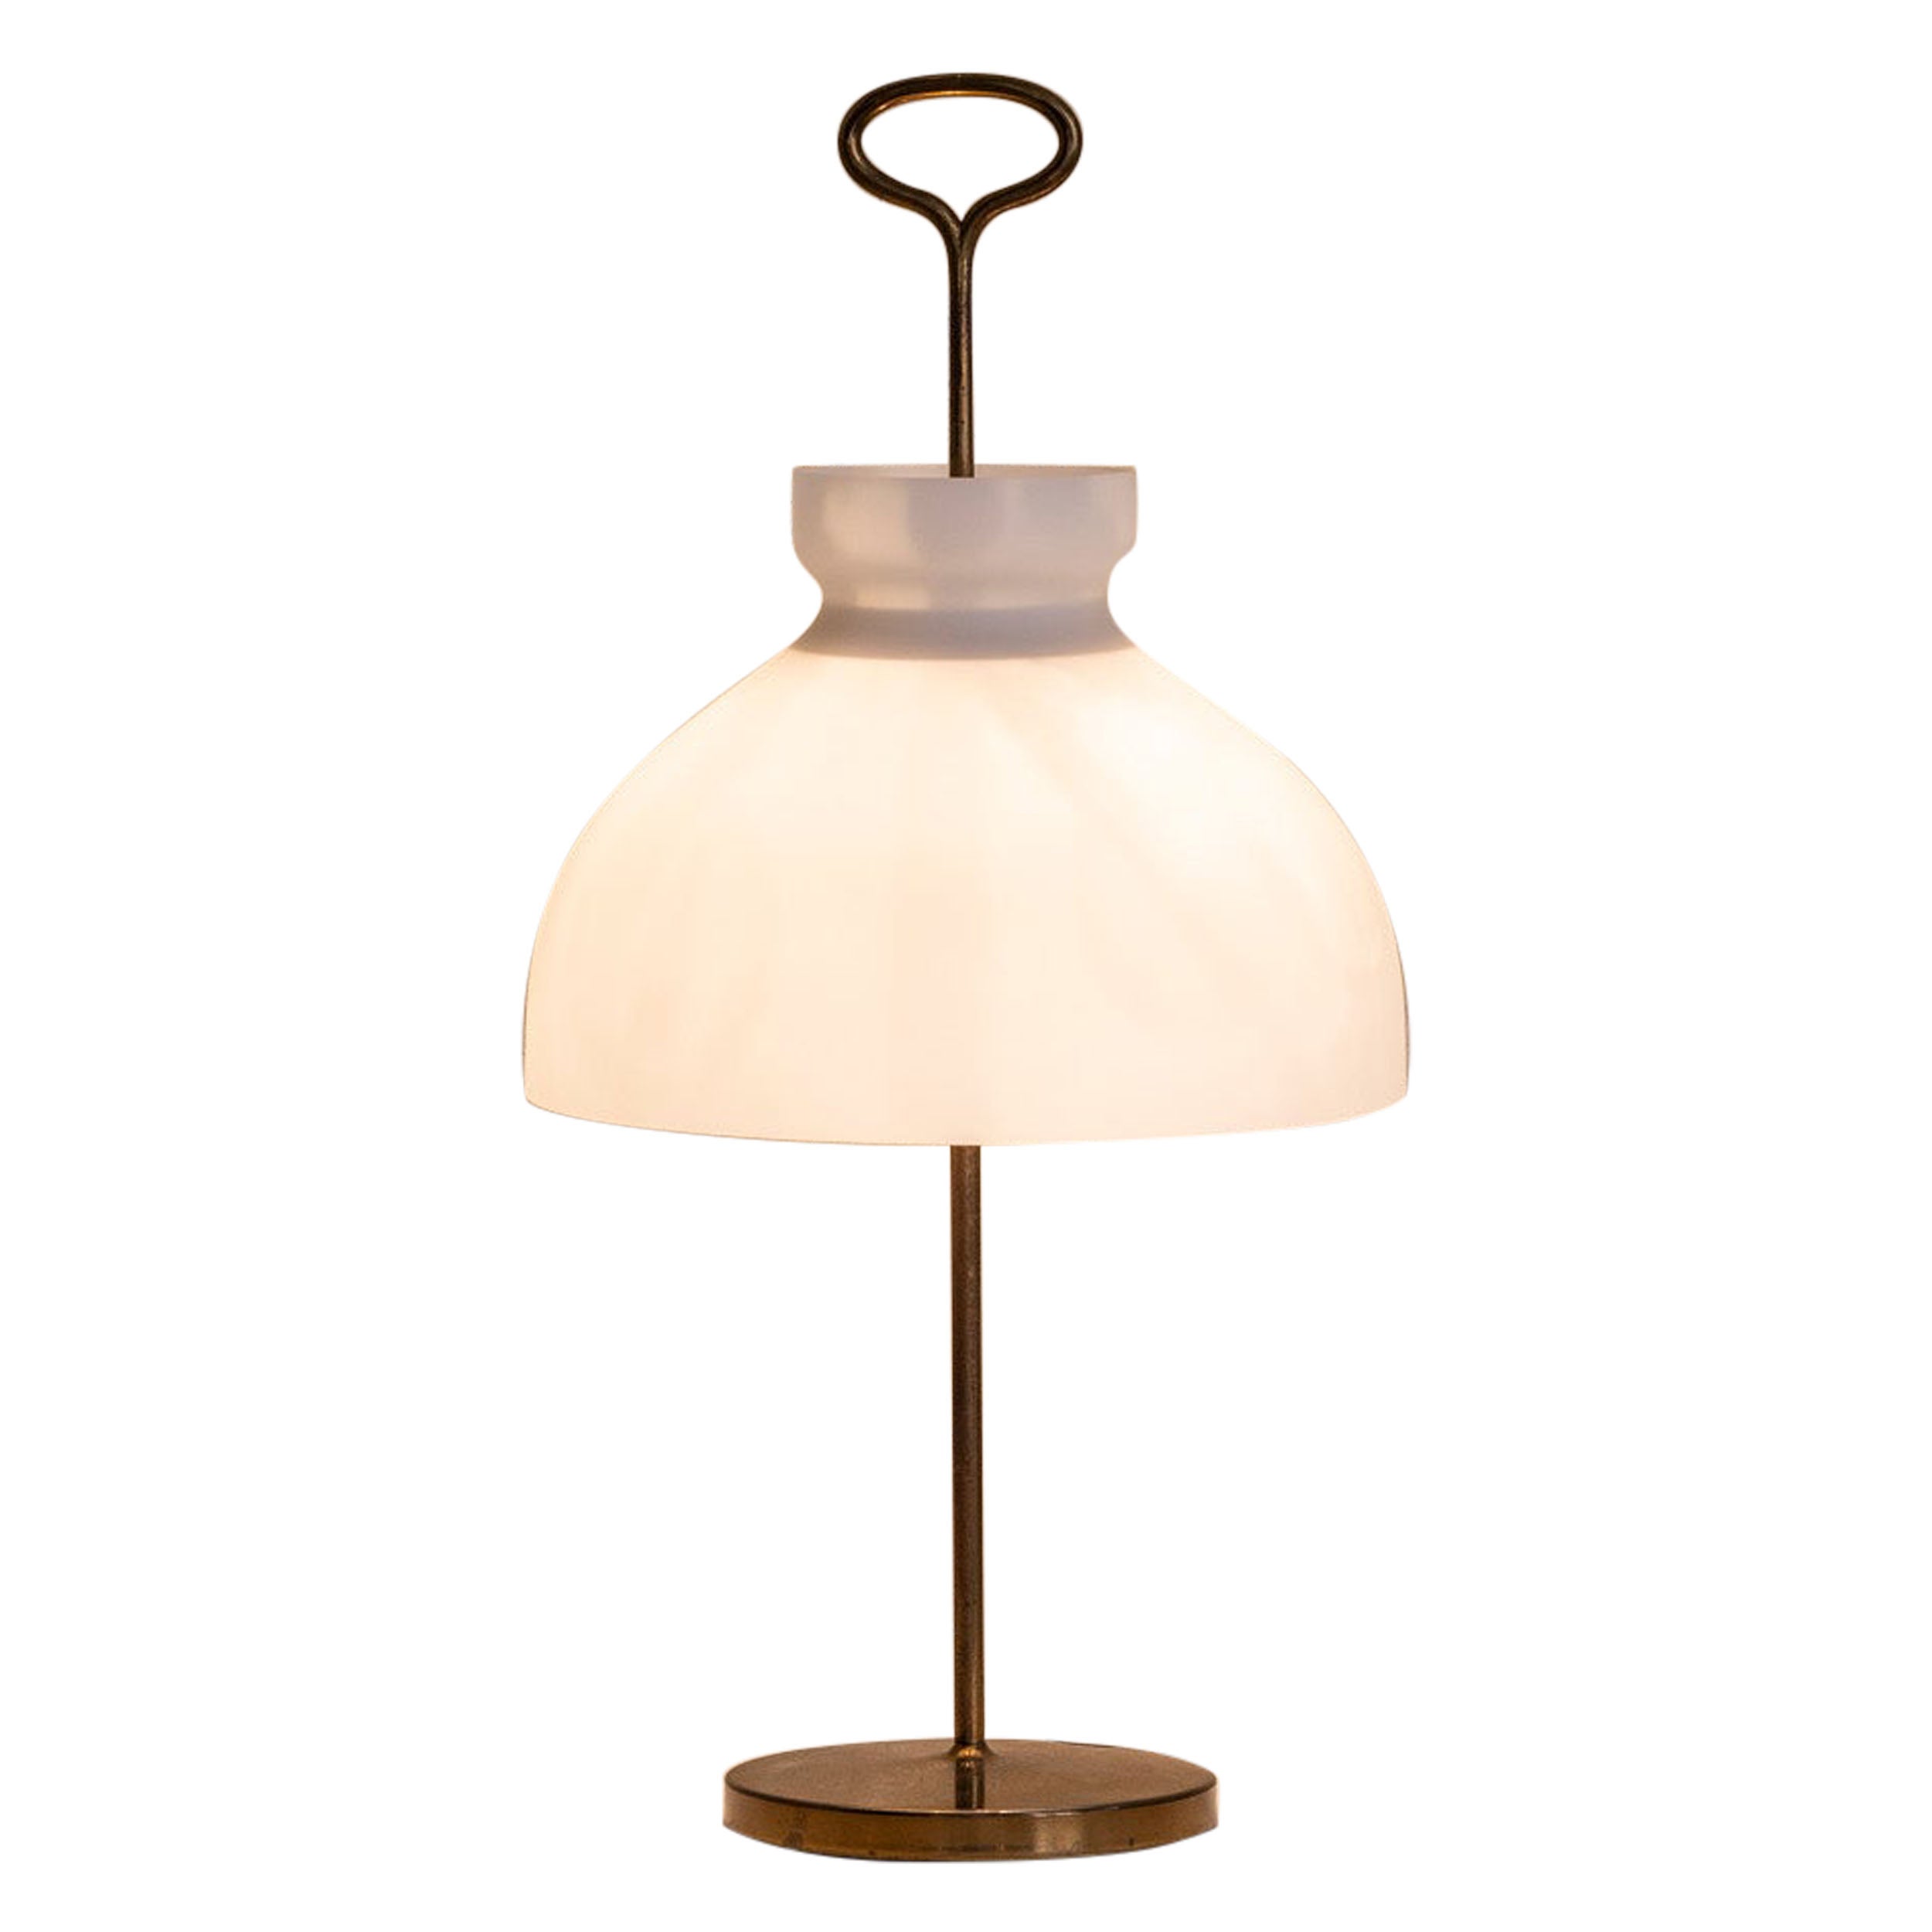  Midcentury Arenzano table lamp by Ignazio Gardella for Azucena, Italy 1956